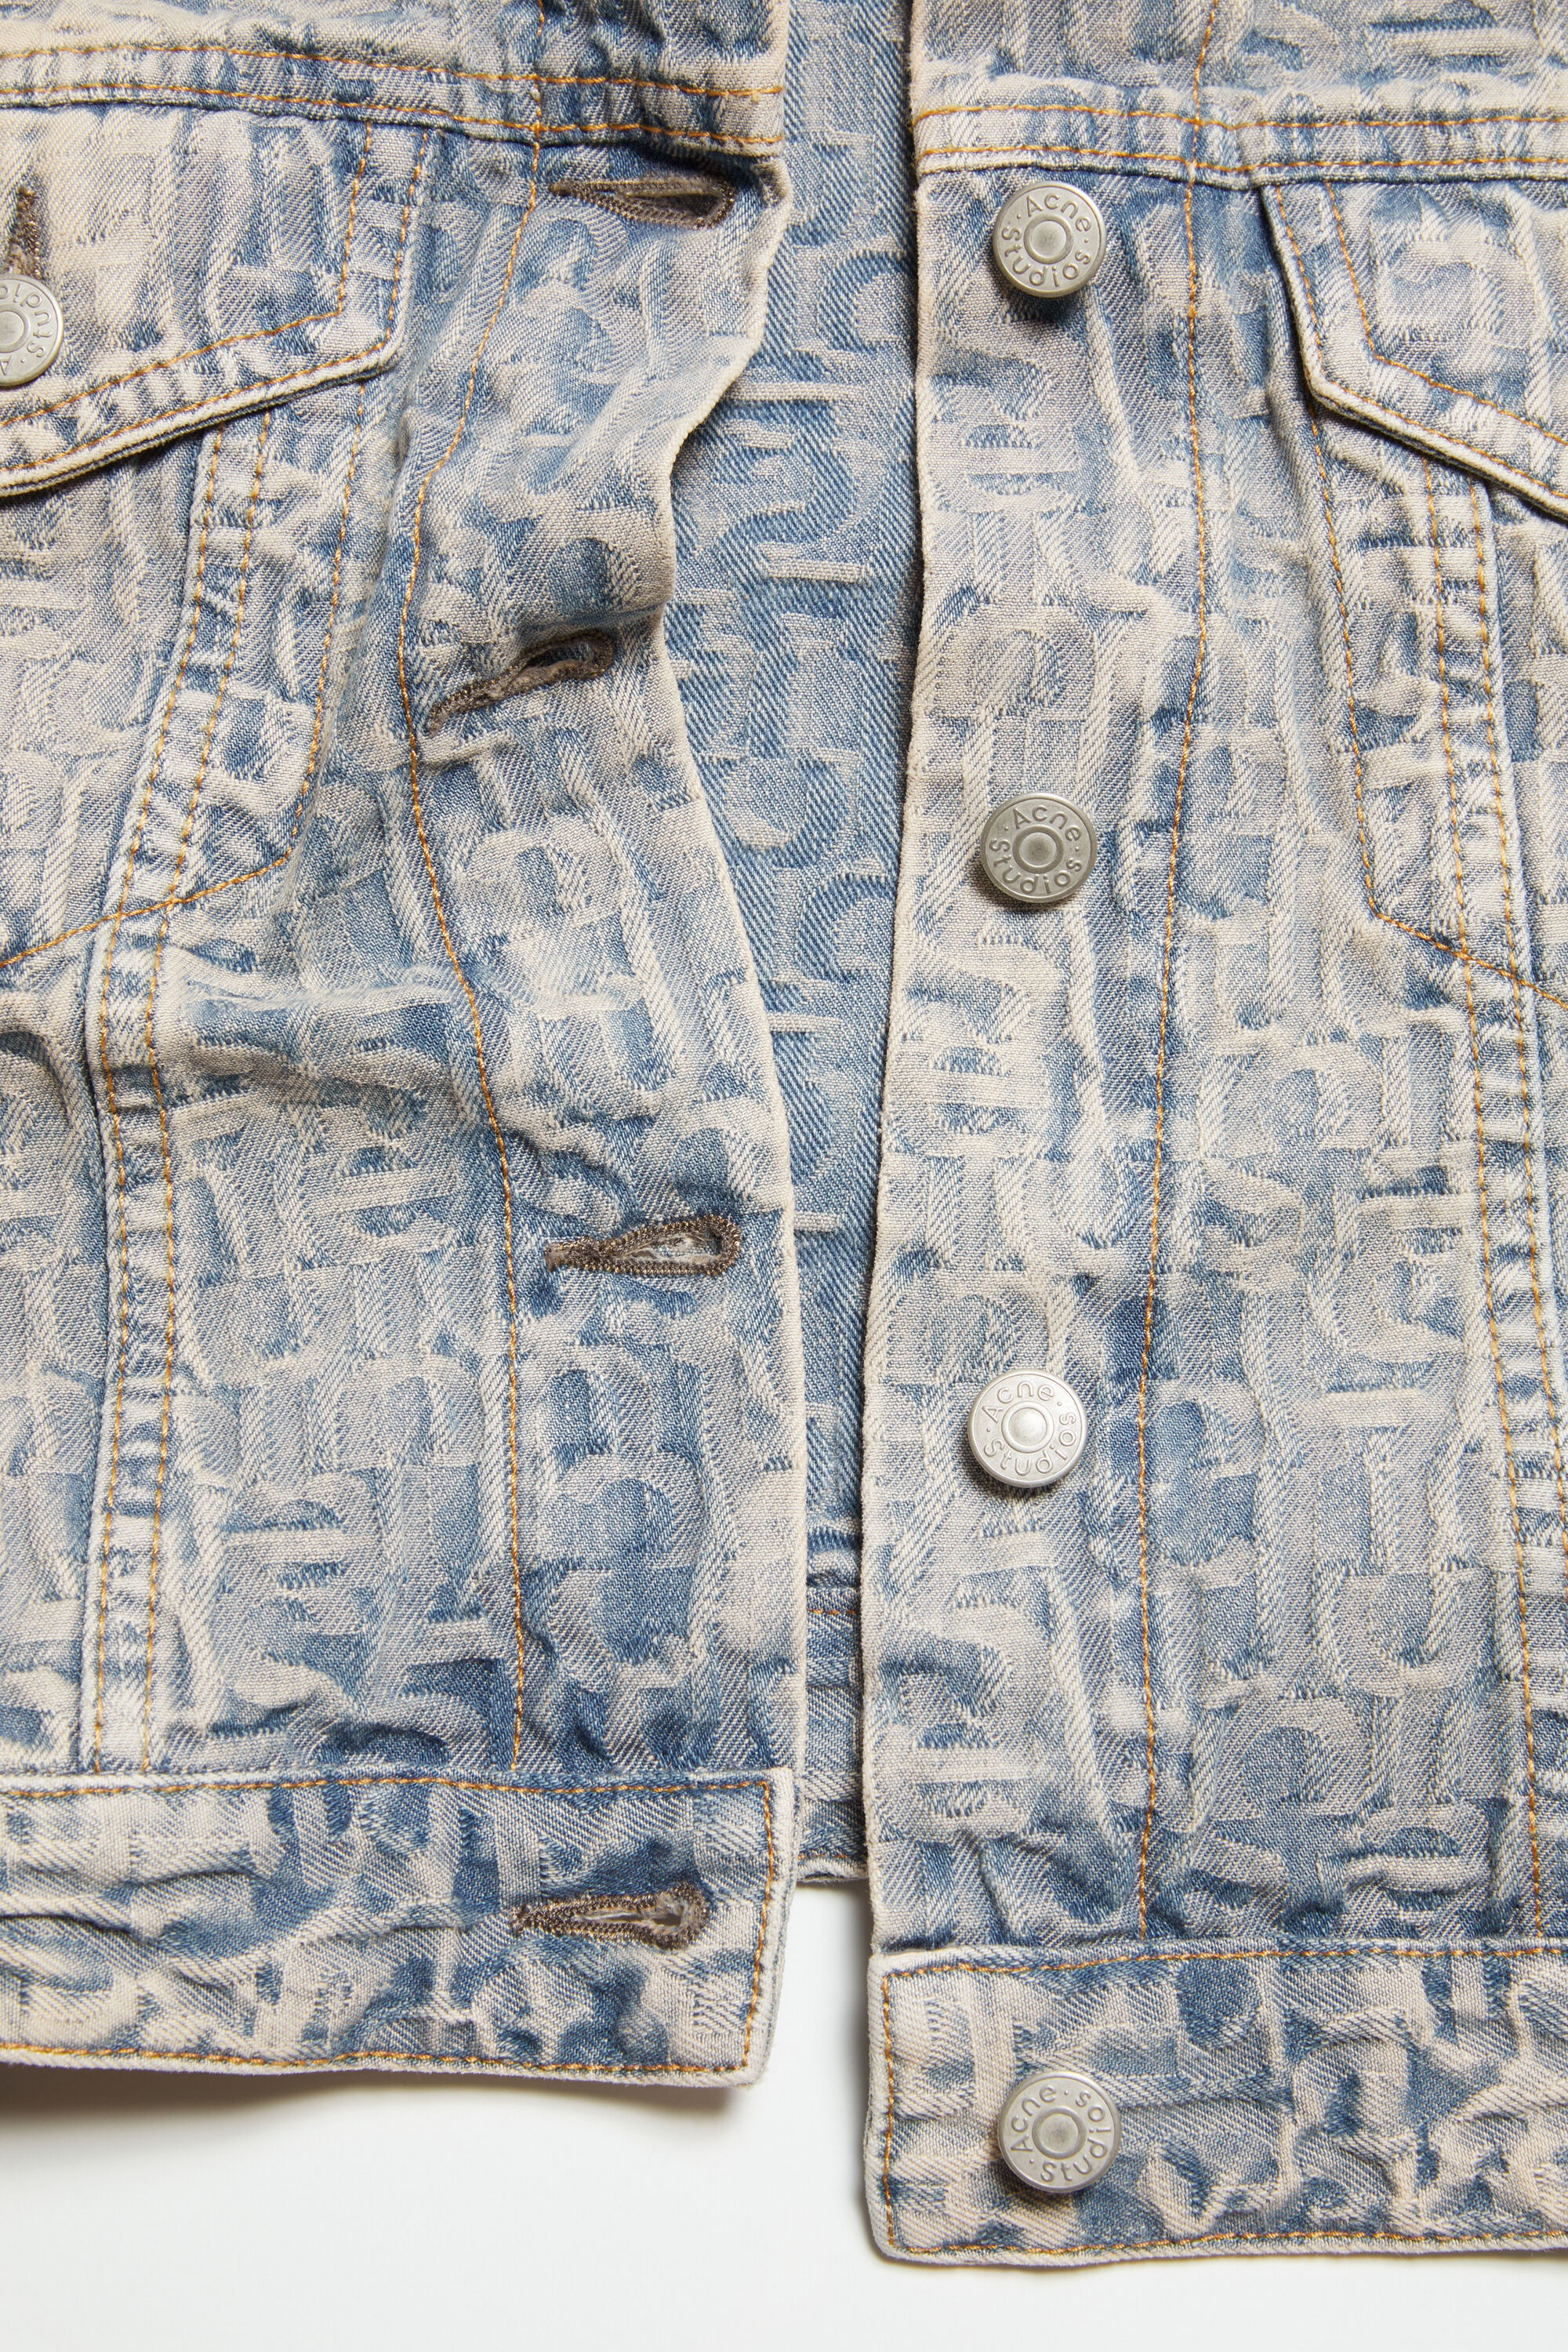 Monogram denim jacket - Fitted fit - Blue/beige - 6